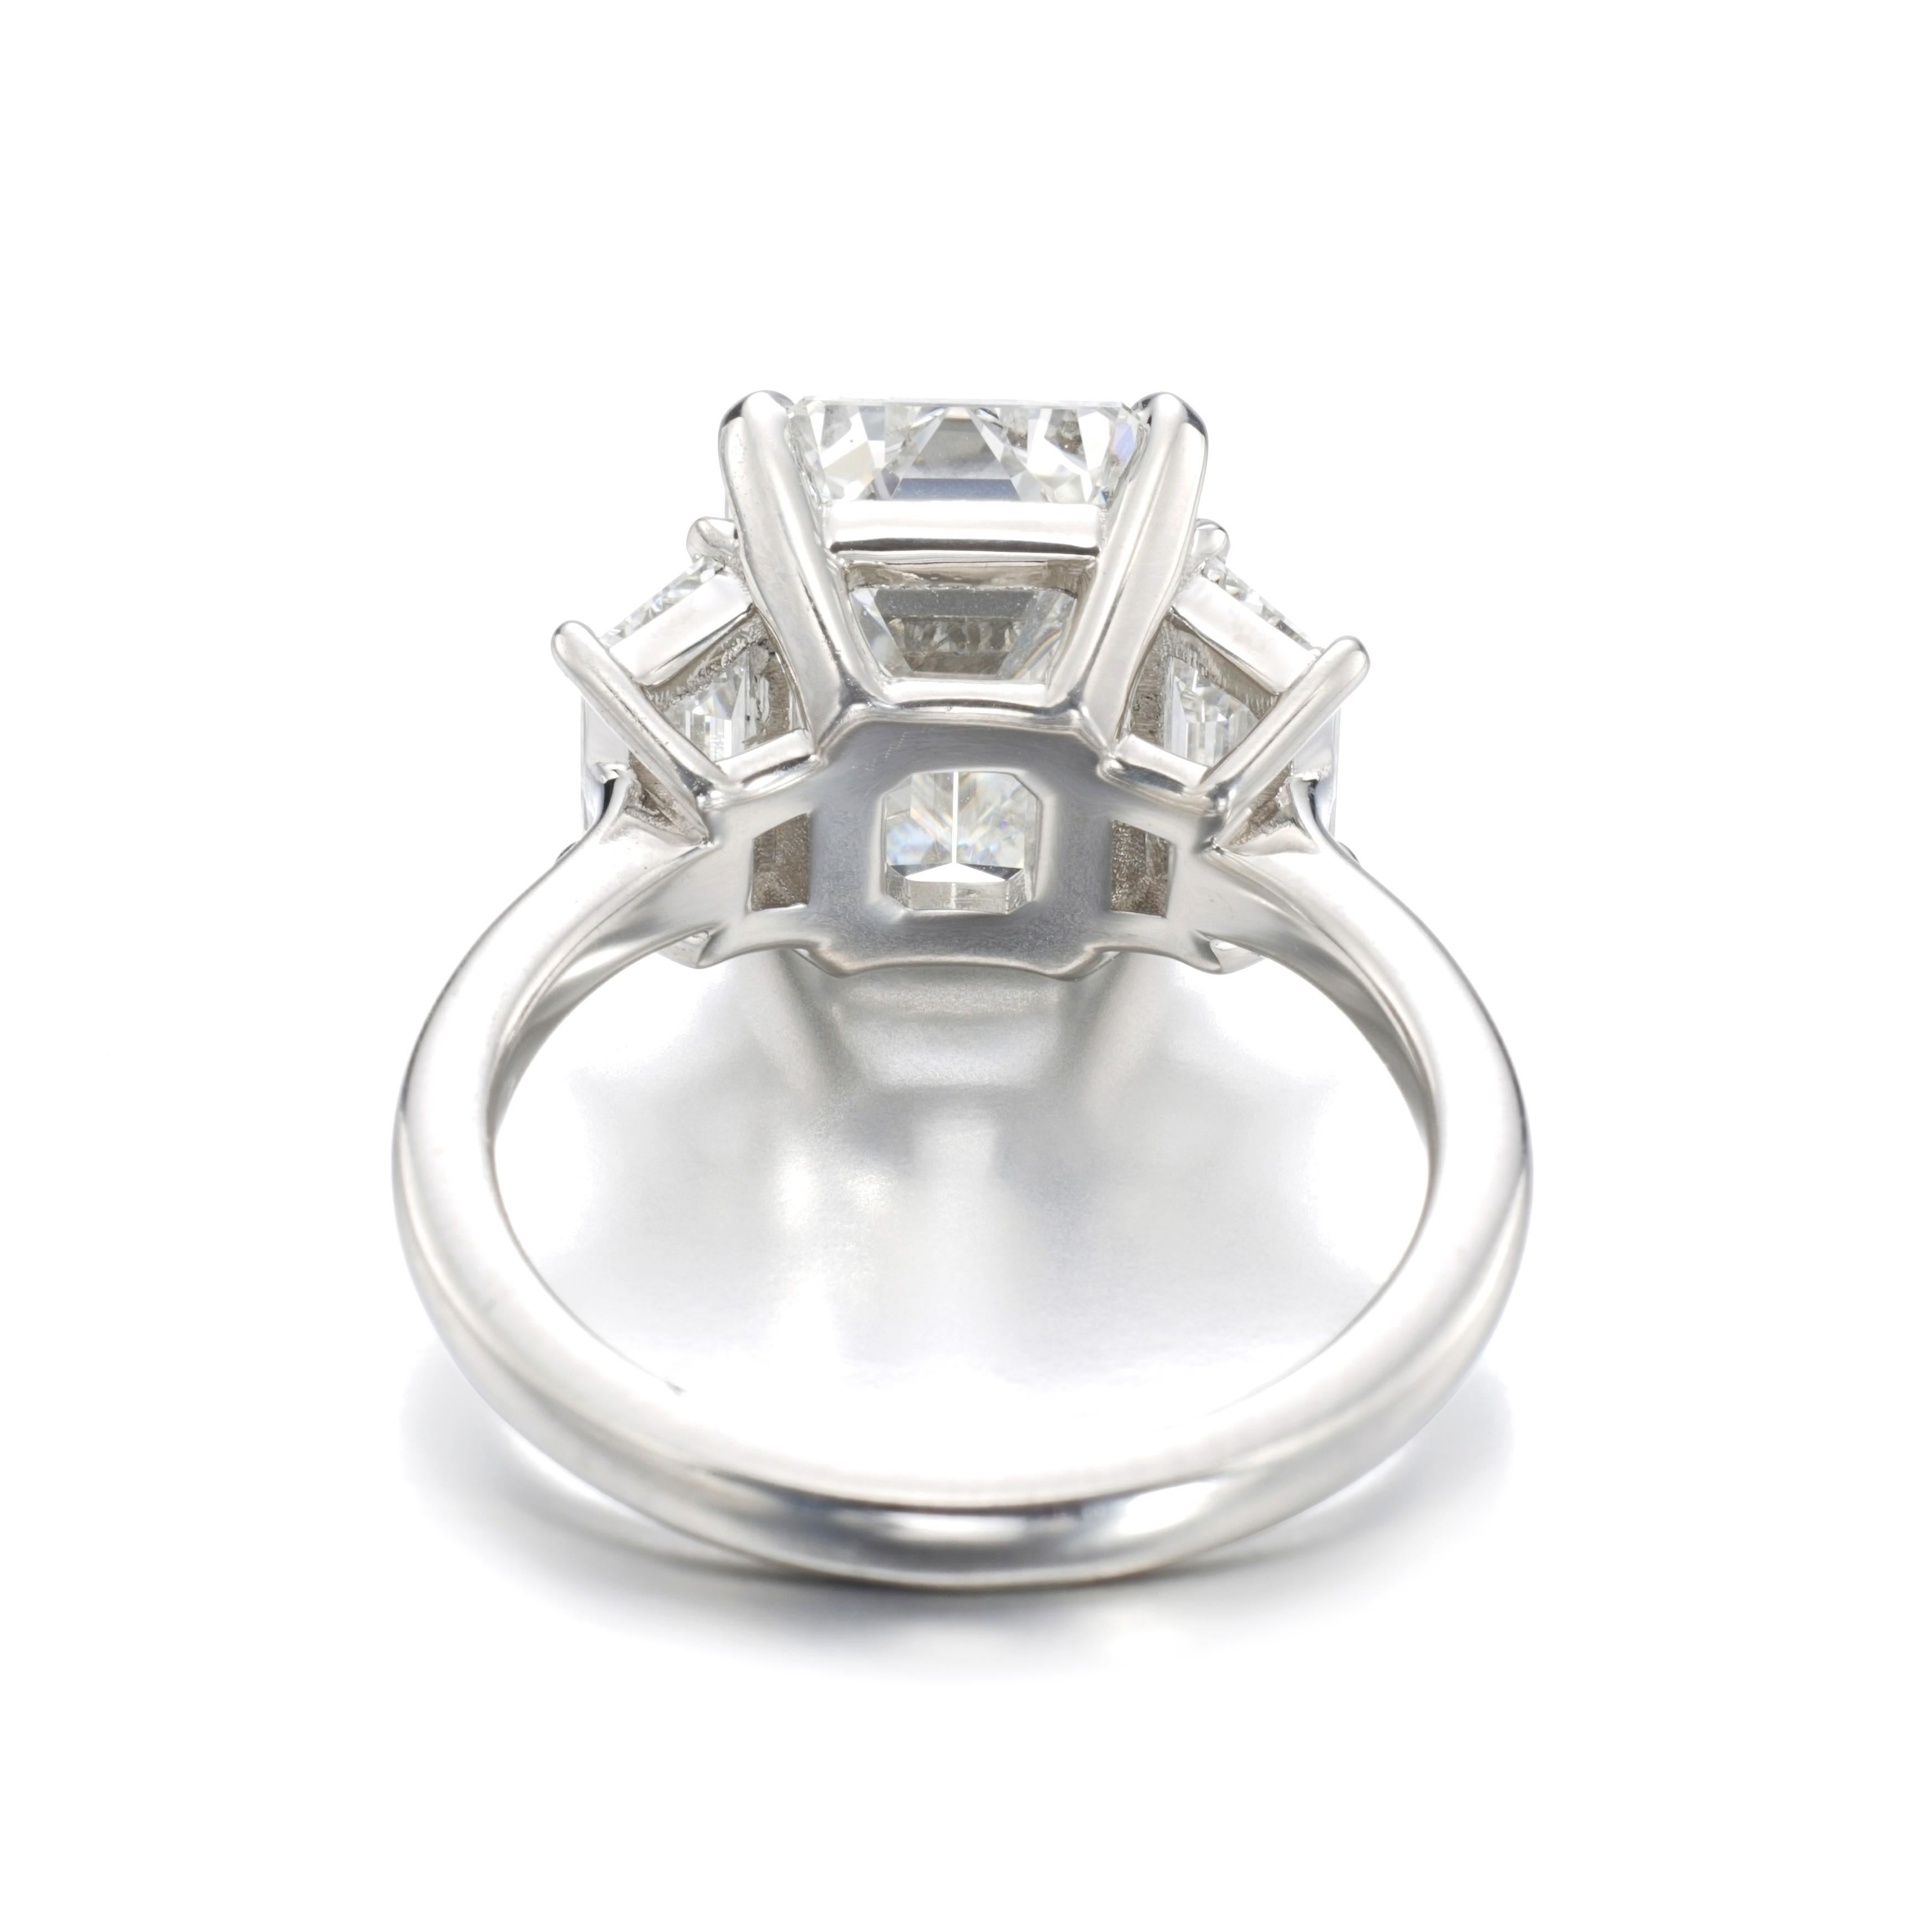 5 carat baguette diamond ring